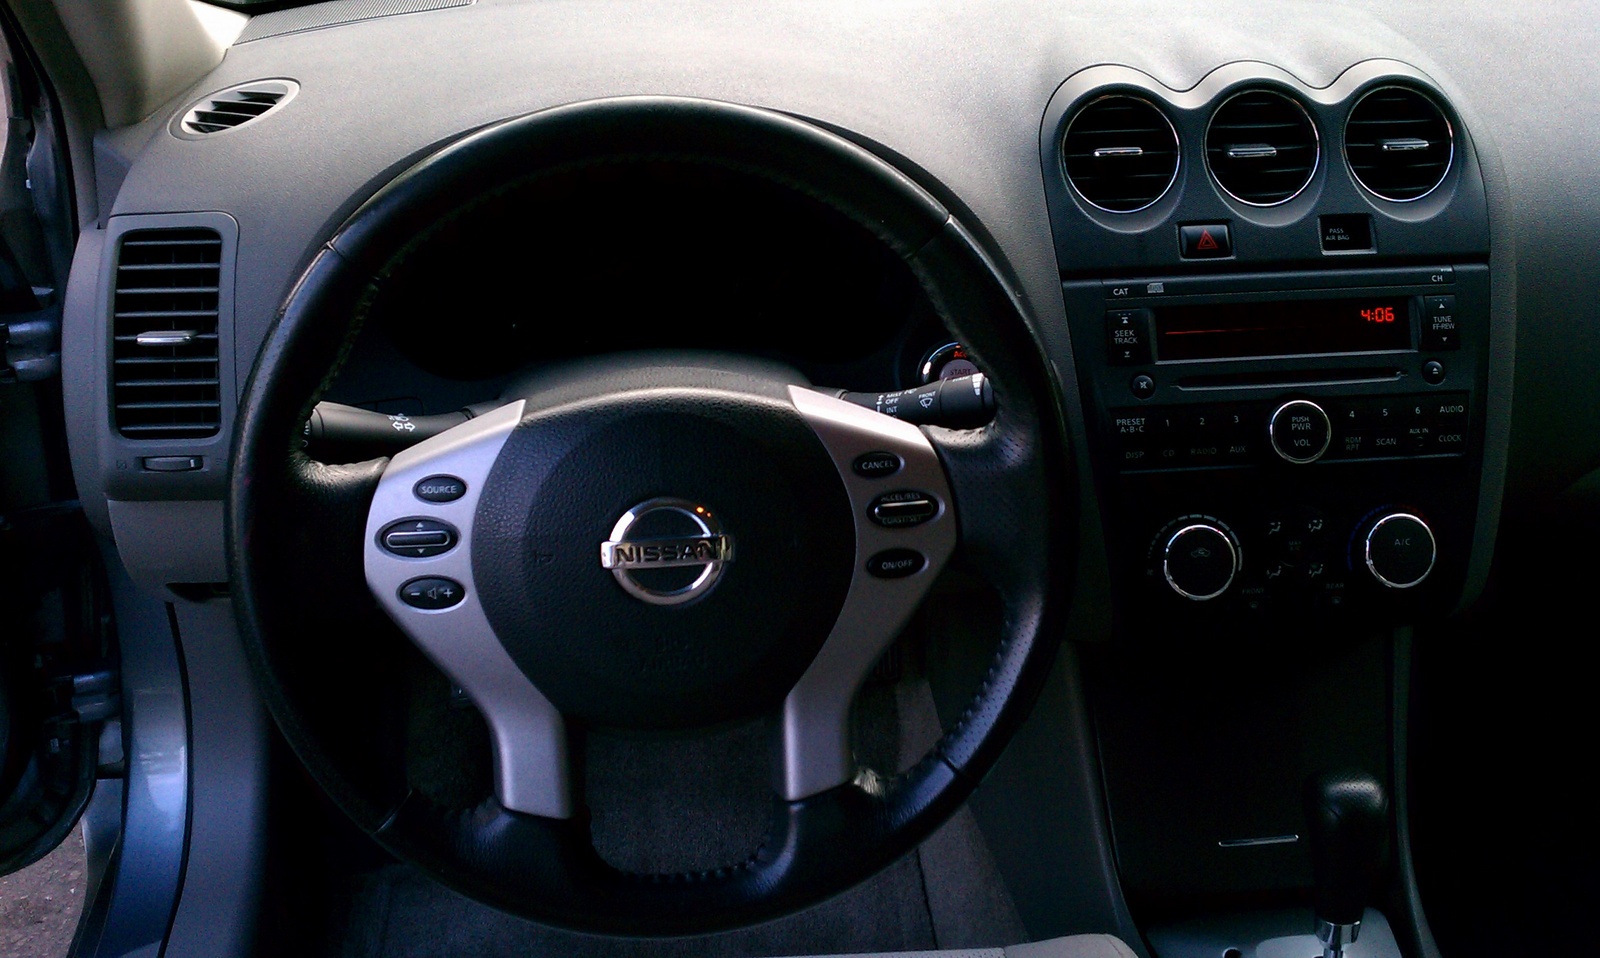 2007 Nissan altima interior accessories #4